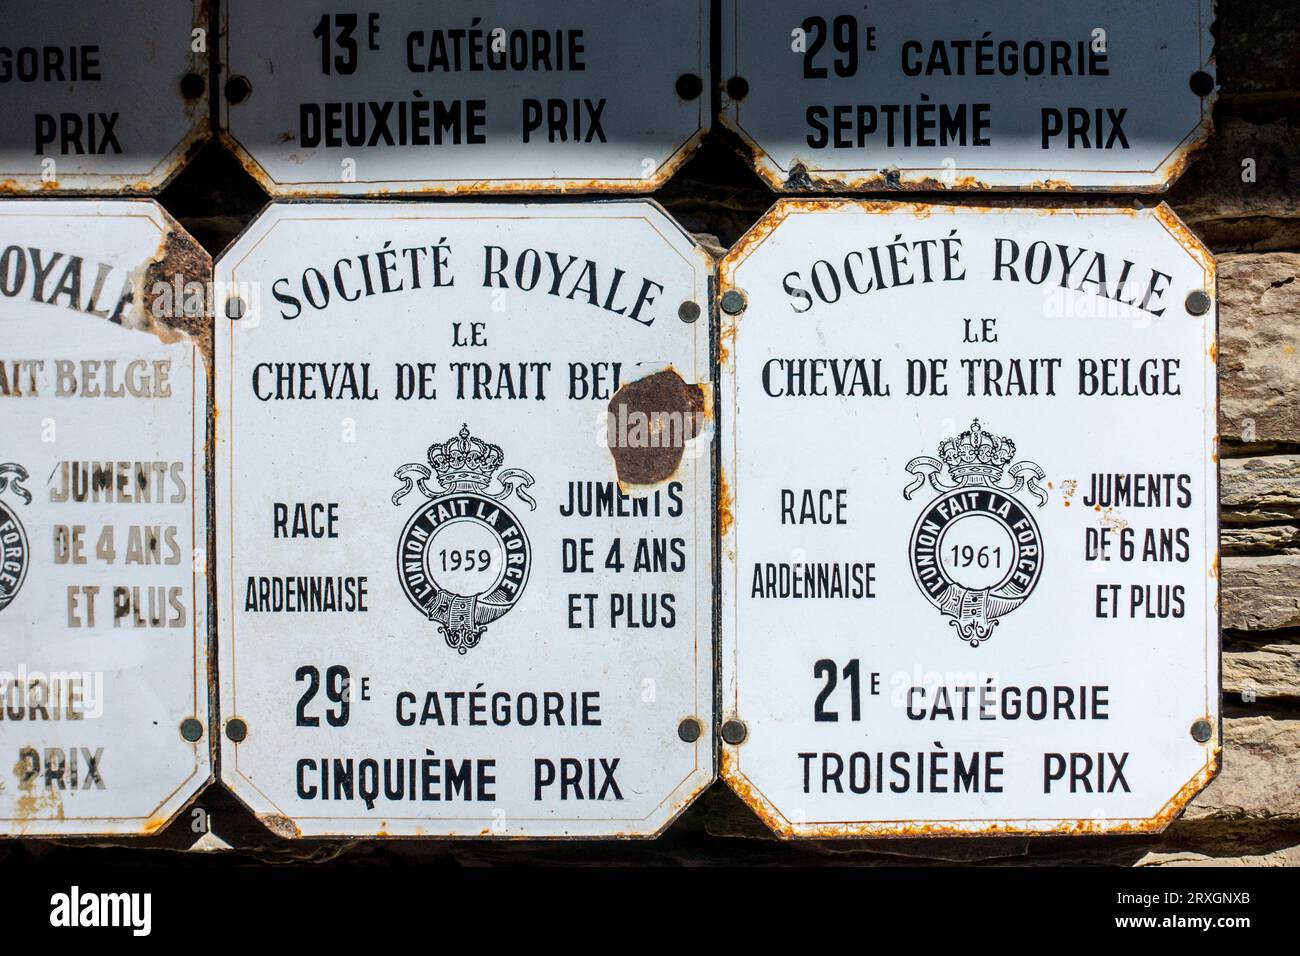 Targhe di gara del draft belga smaltate della Société Royale de Cheval de Trait Belge per cavalli da tiro belgi, Belgio Foto Stock